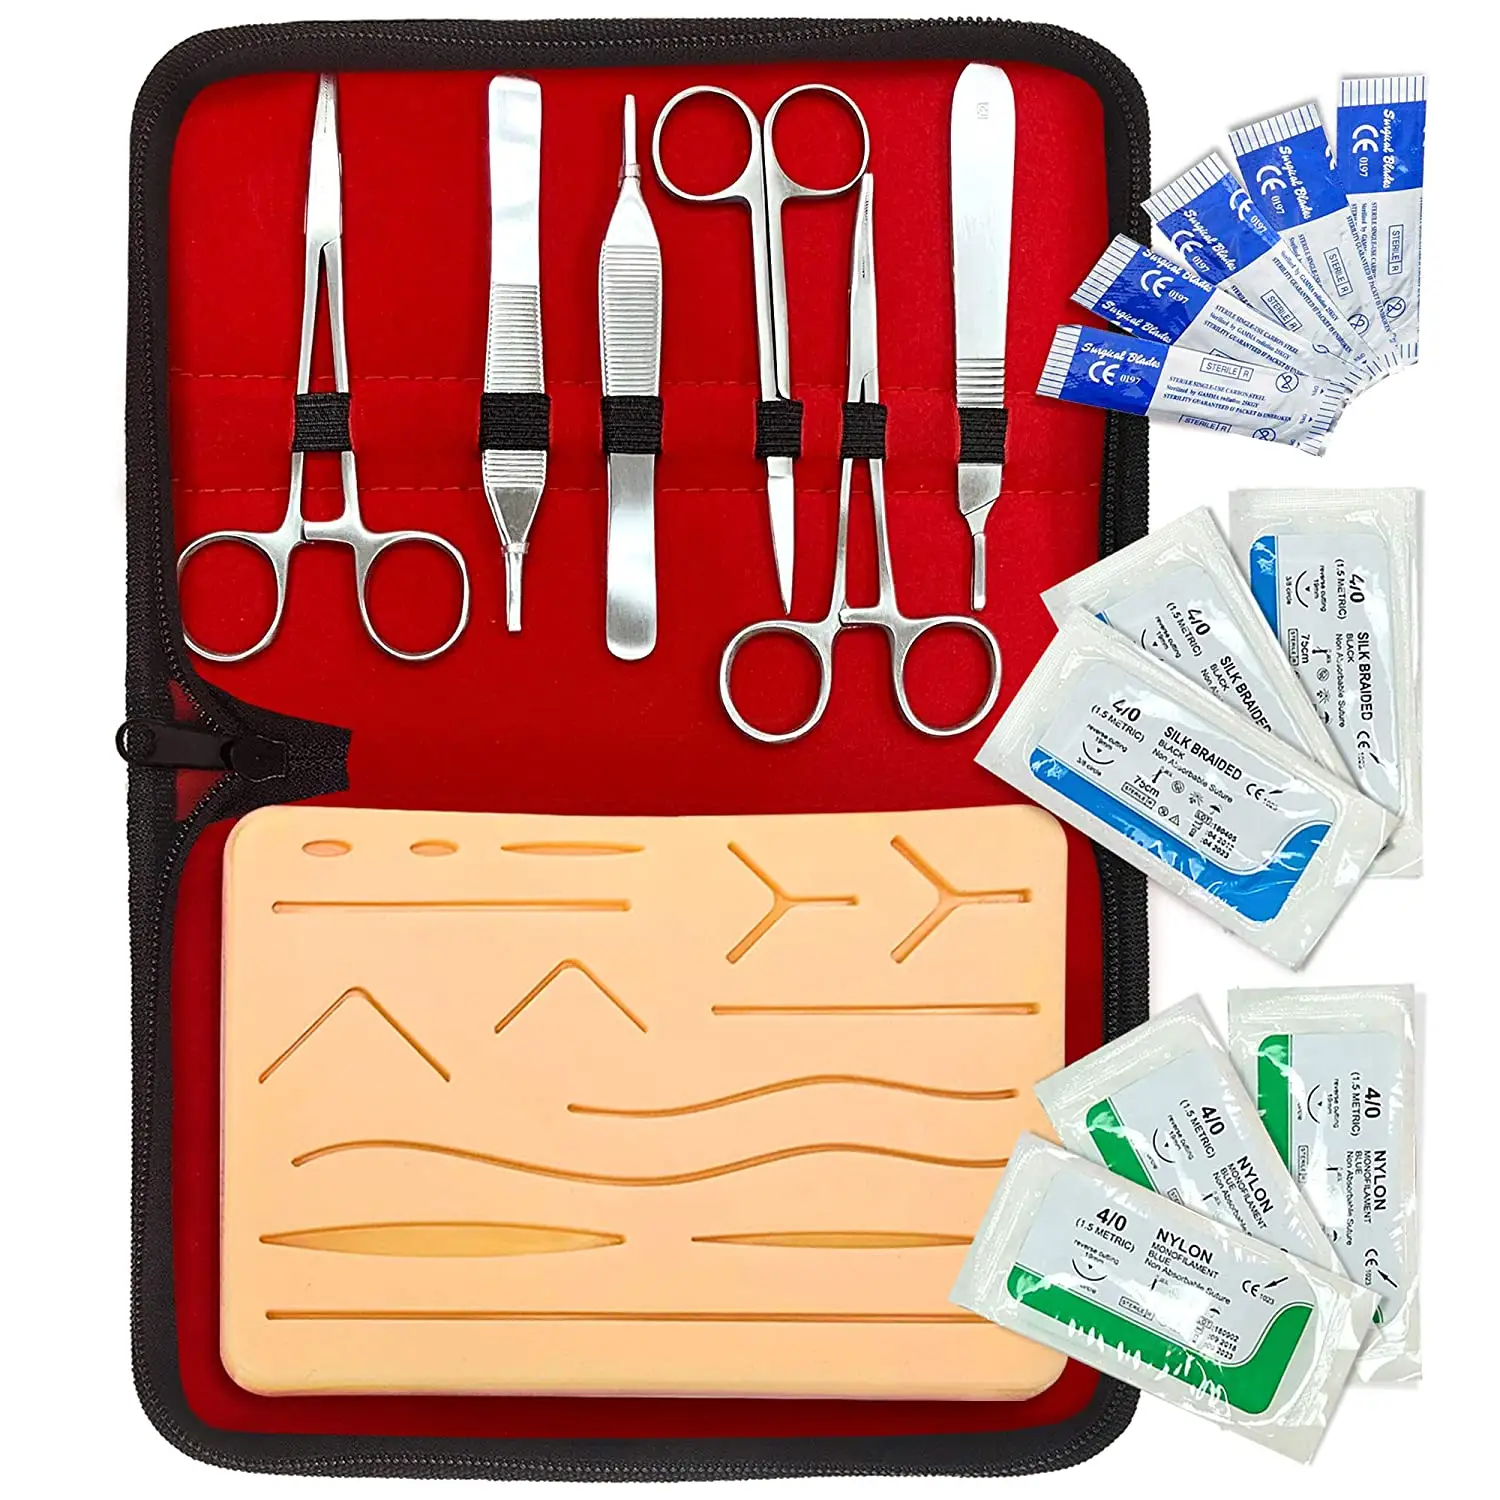 veterinary suture practice kit